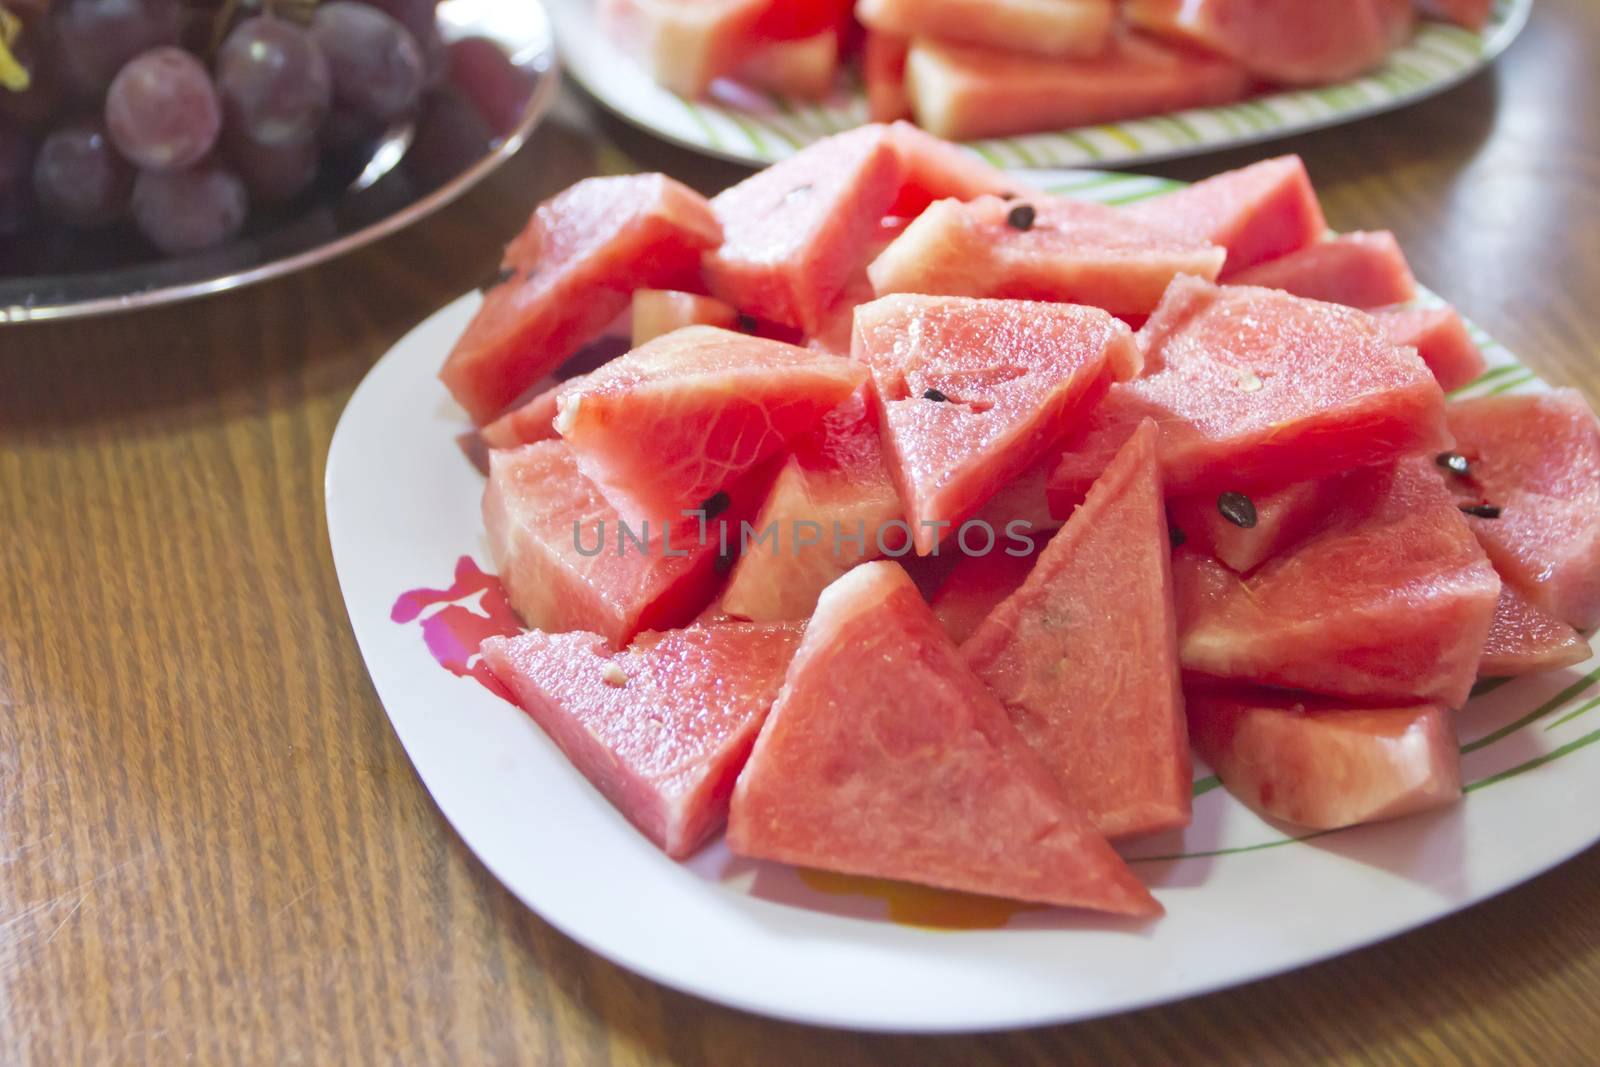  watermelon by wyoosumran